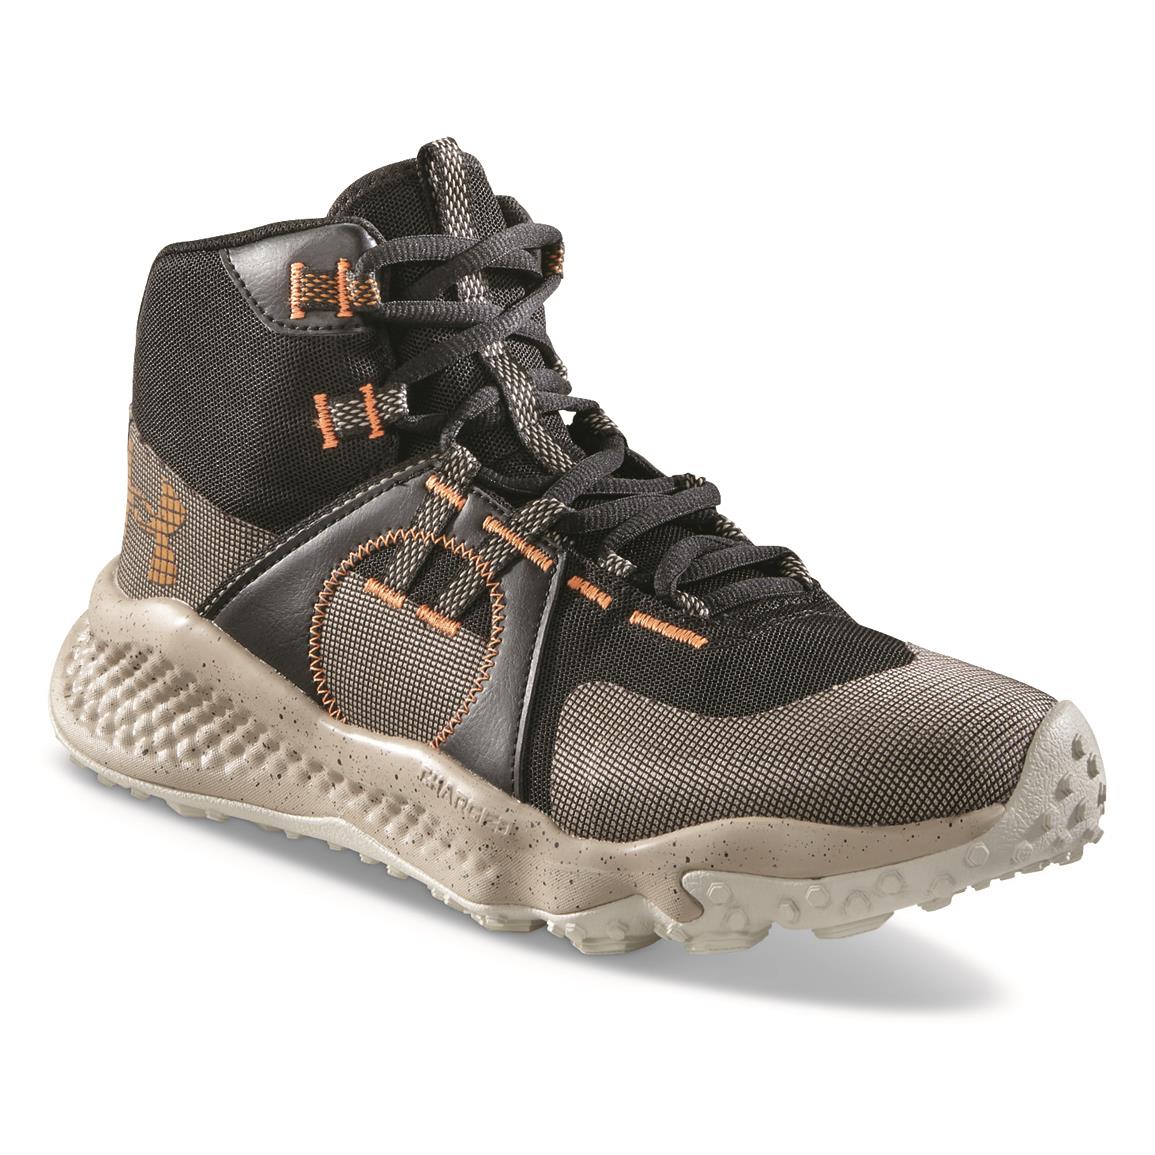 Under Armour Charged Maven Trek Hiking Shoes, Black/sahara/honey Orange